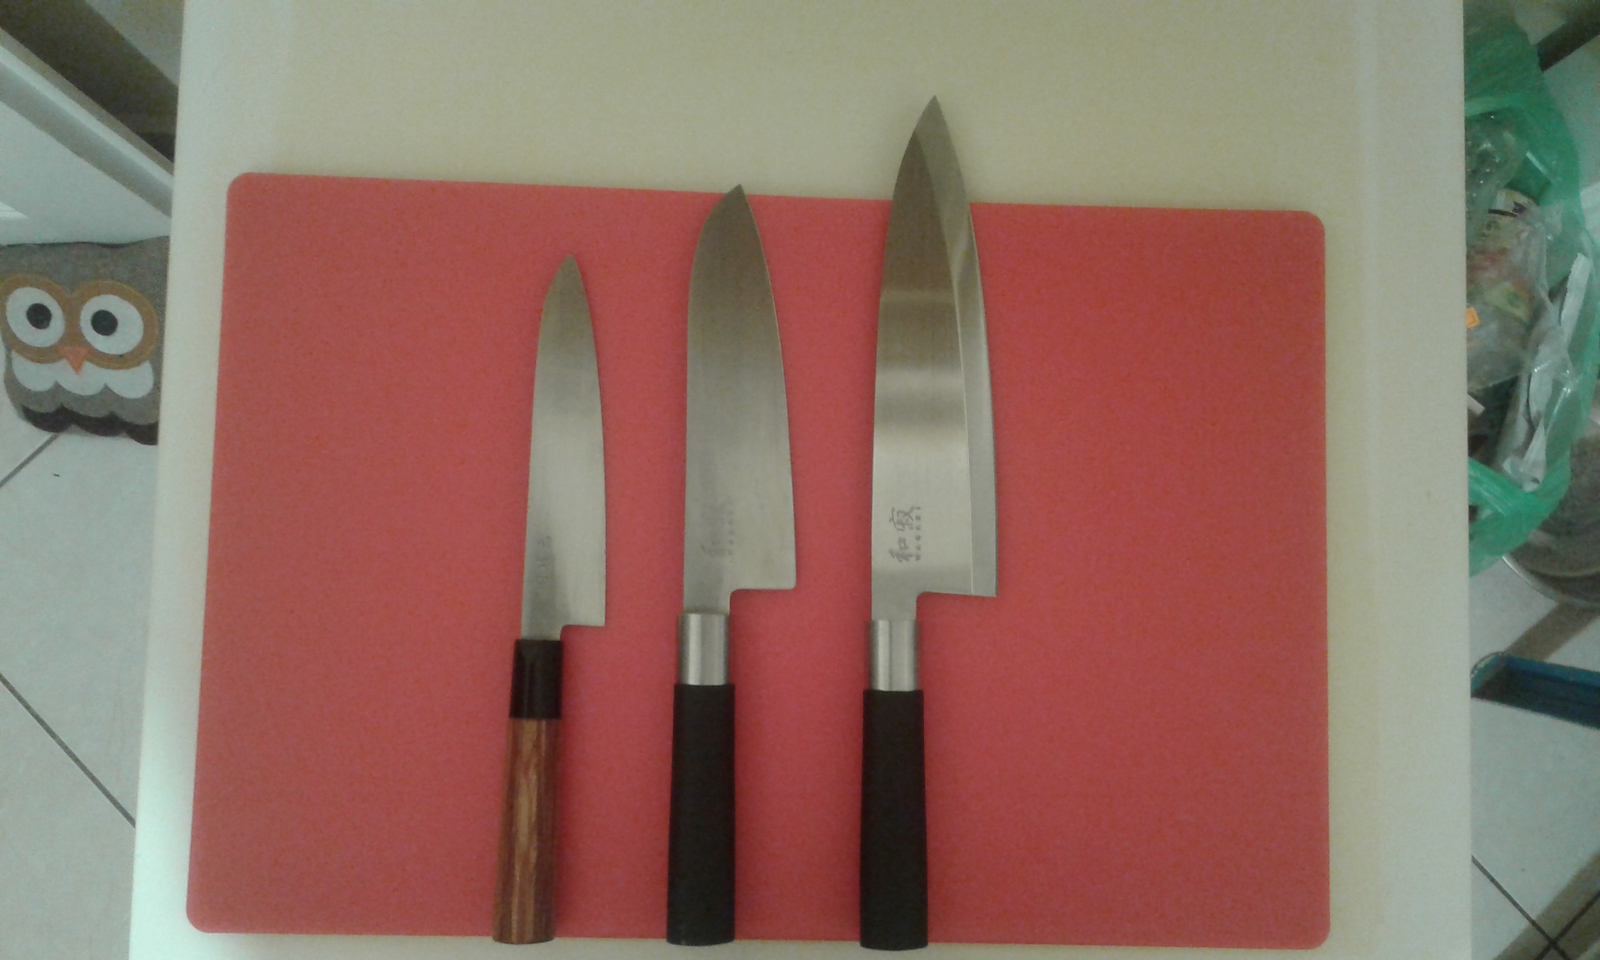 KAI Wasabi Black 6720C chef knife with 20 cm blade - 72-1574702